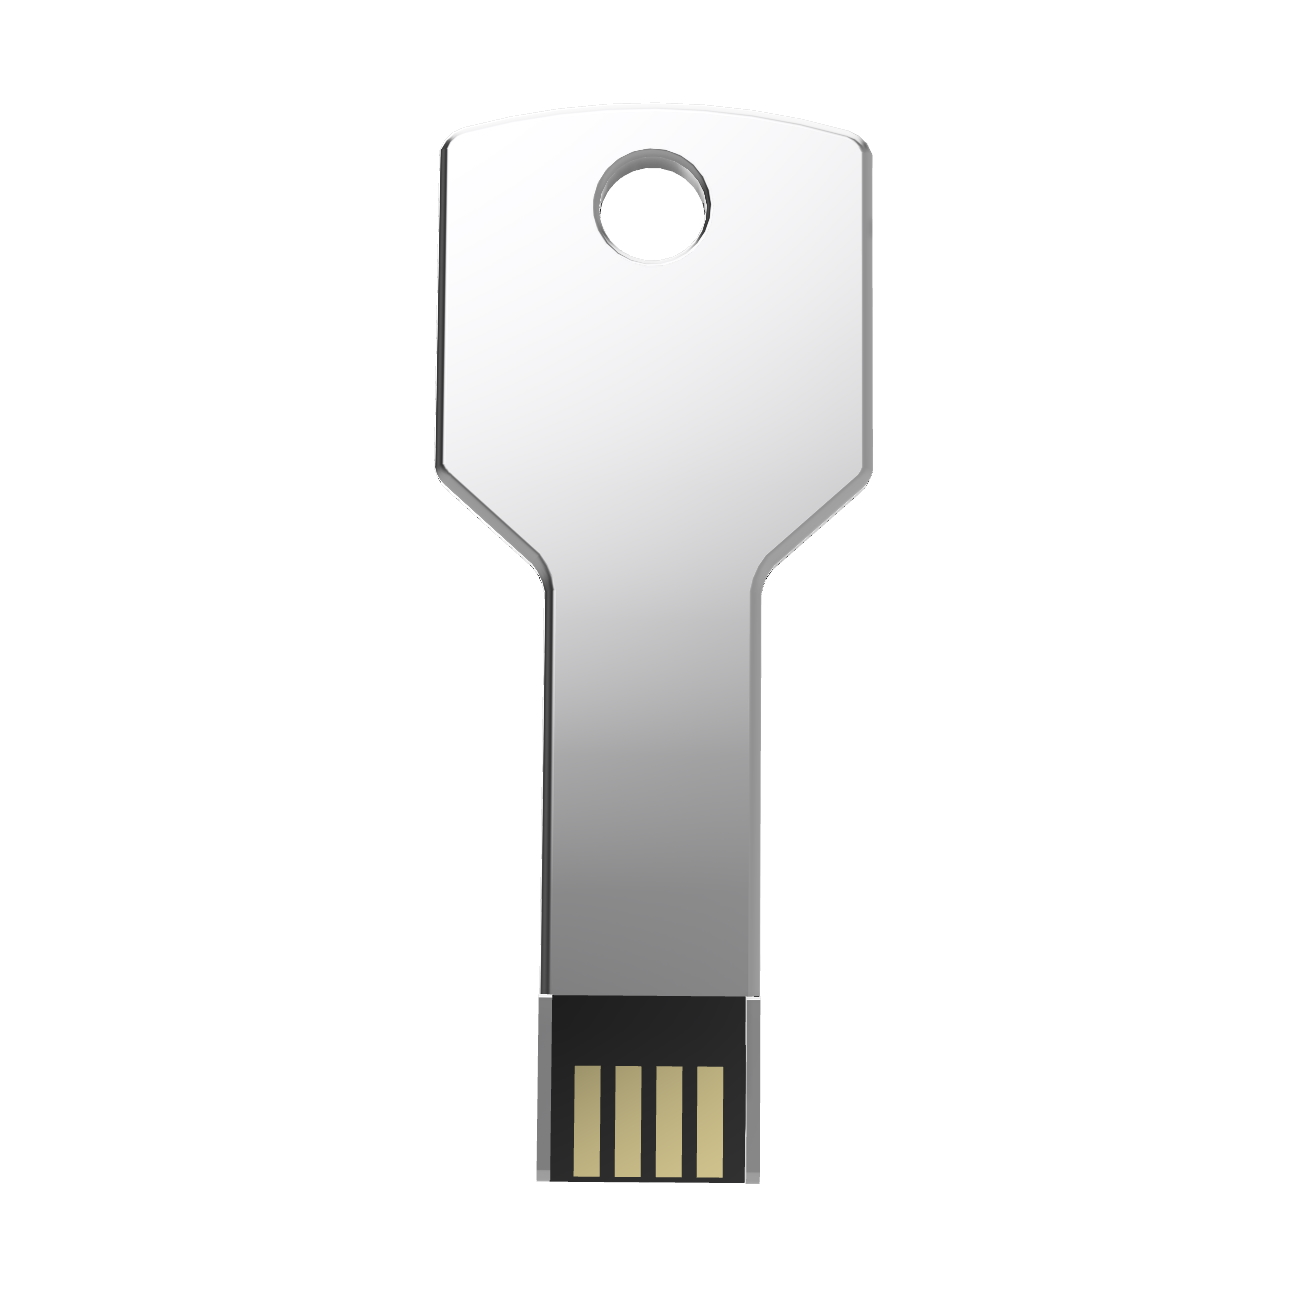 GB) 128GB USB USB-Stick (silver, GERMANY 128 Silber Key